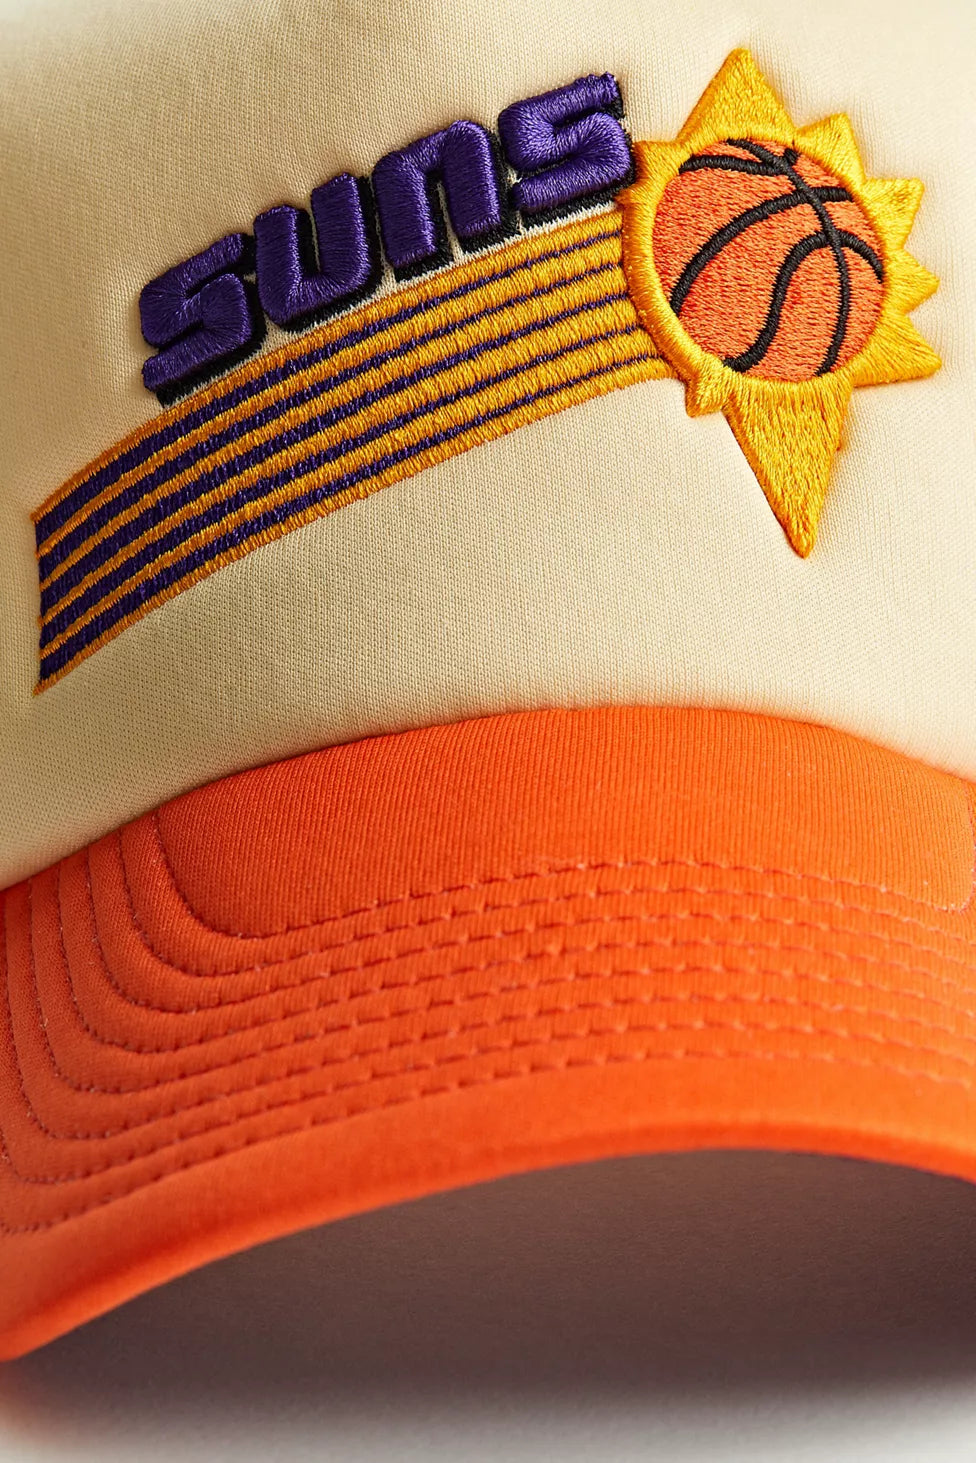 Retro Phoenix Suns Trucker Hat